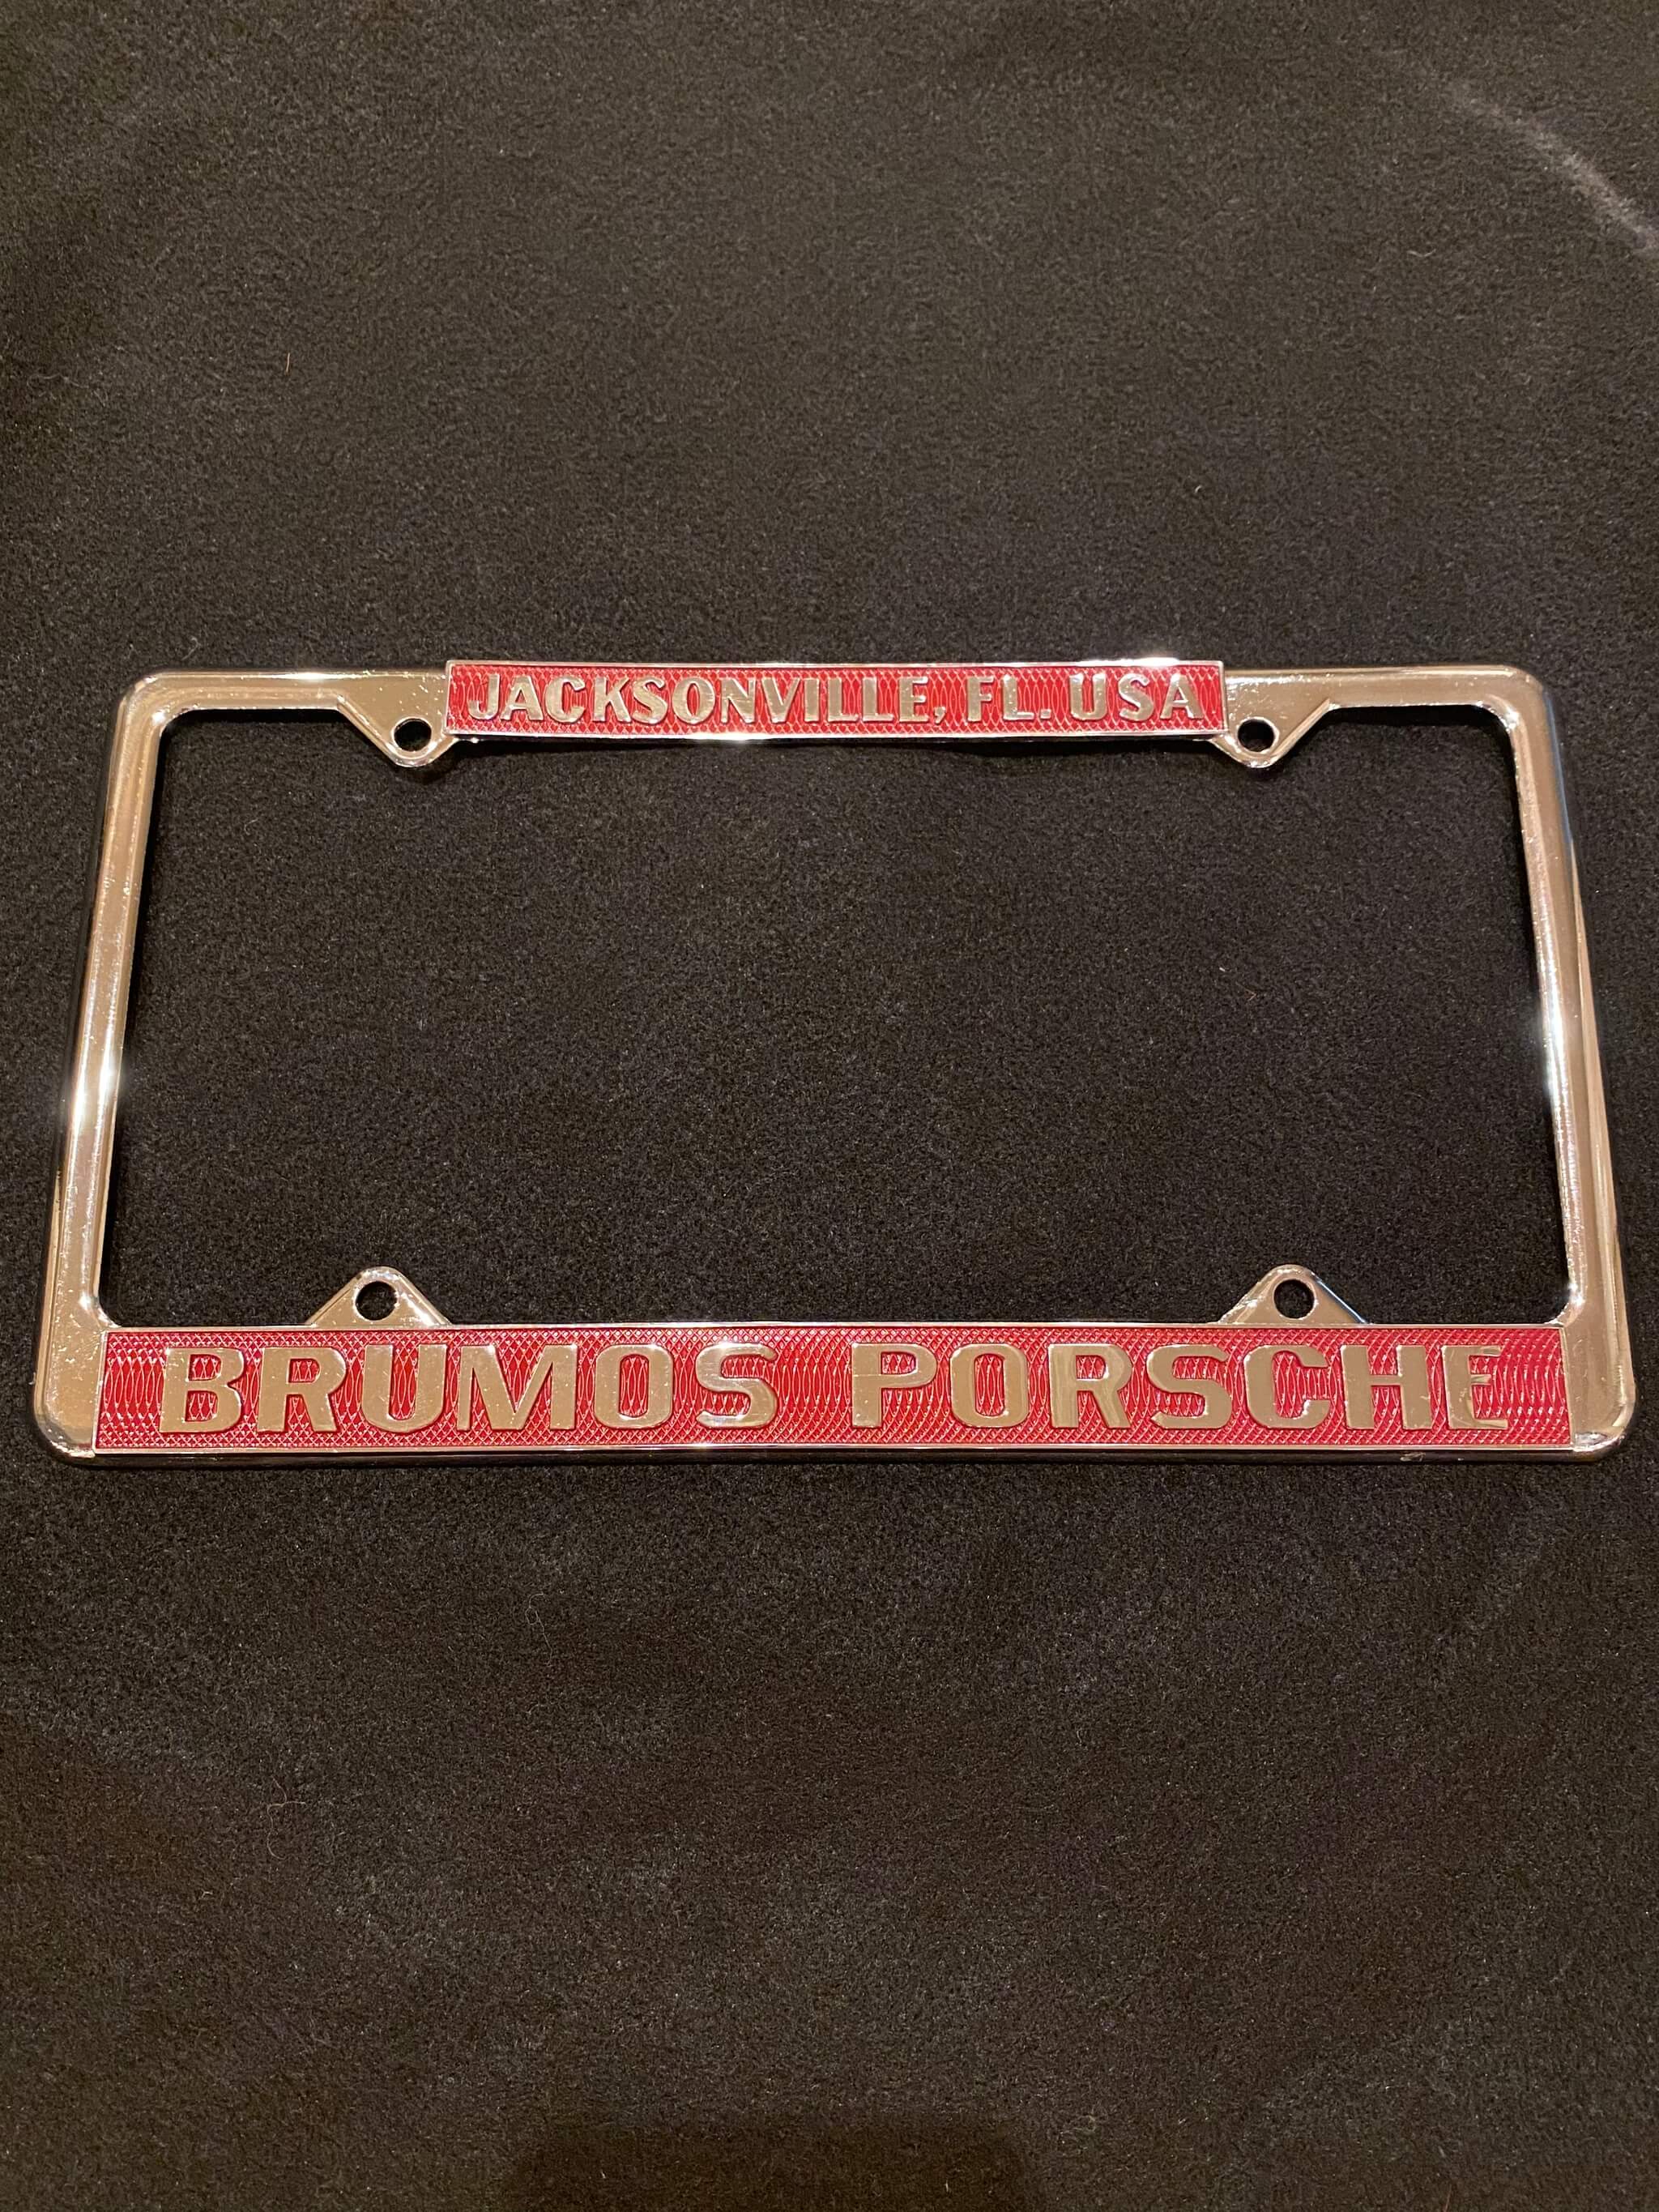 NO RESERVE- Brumos Porsche Dealership Collectible License Plate Frame